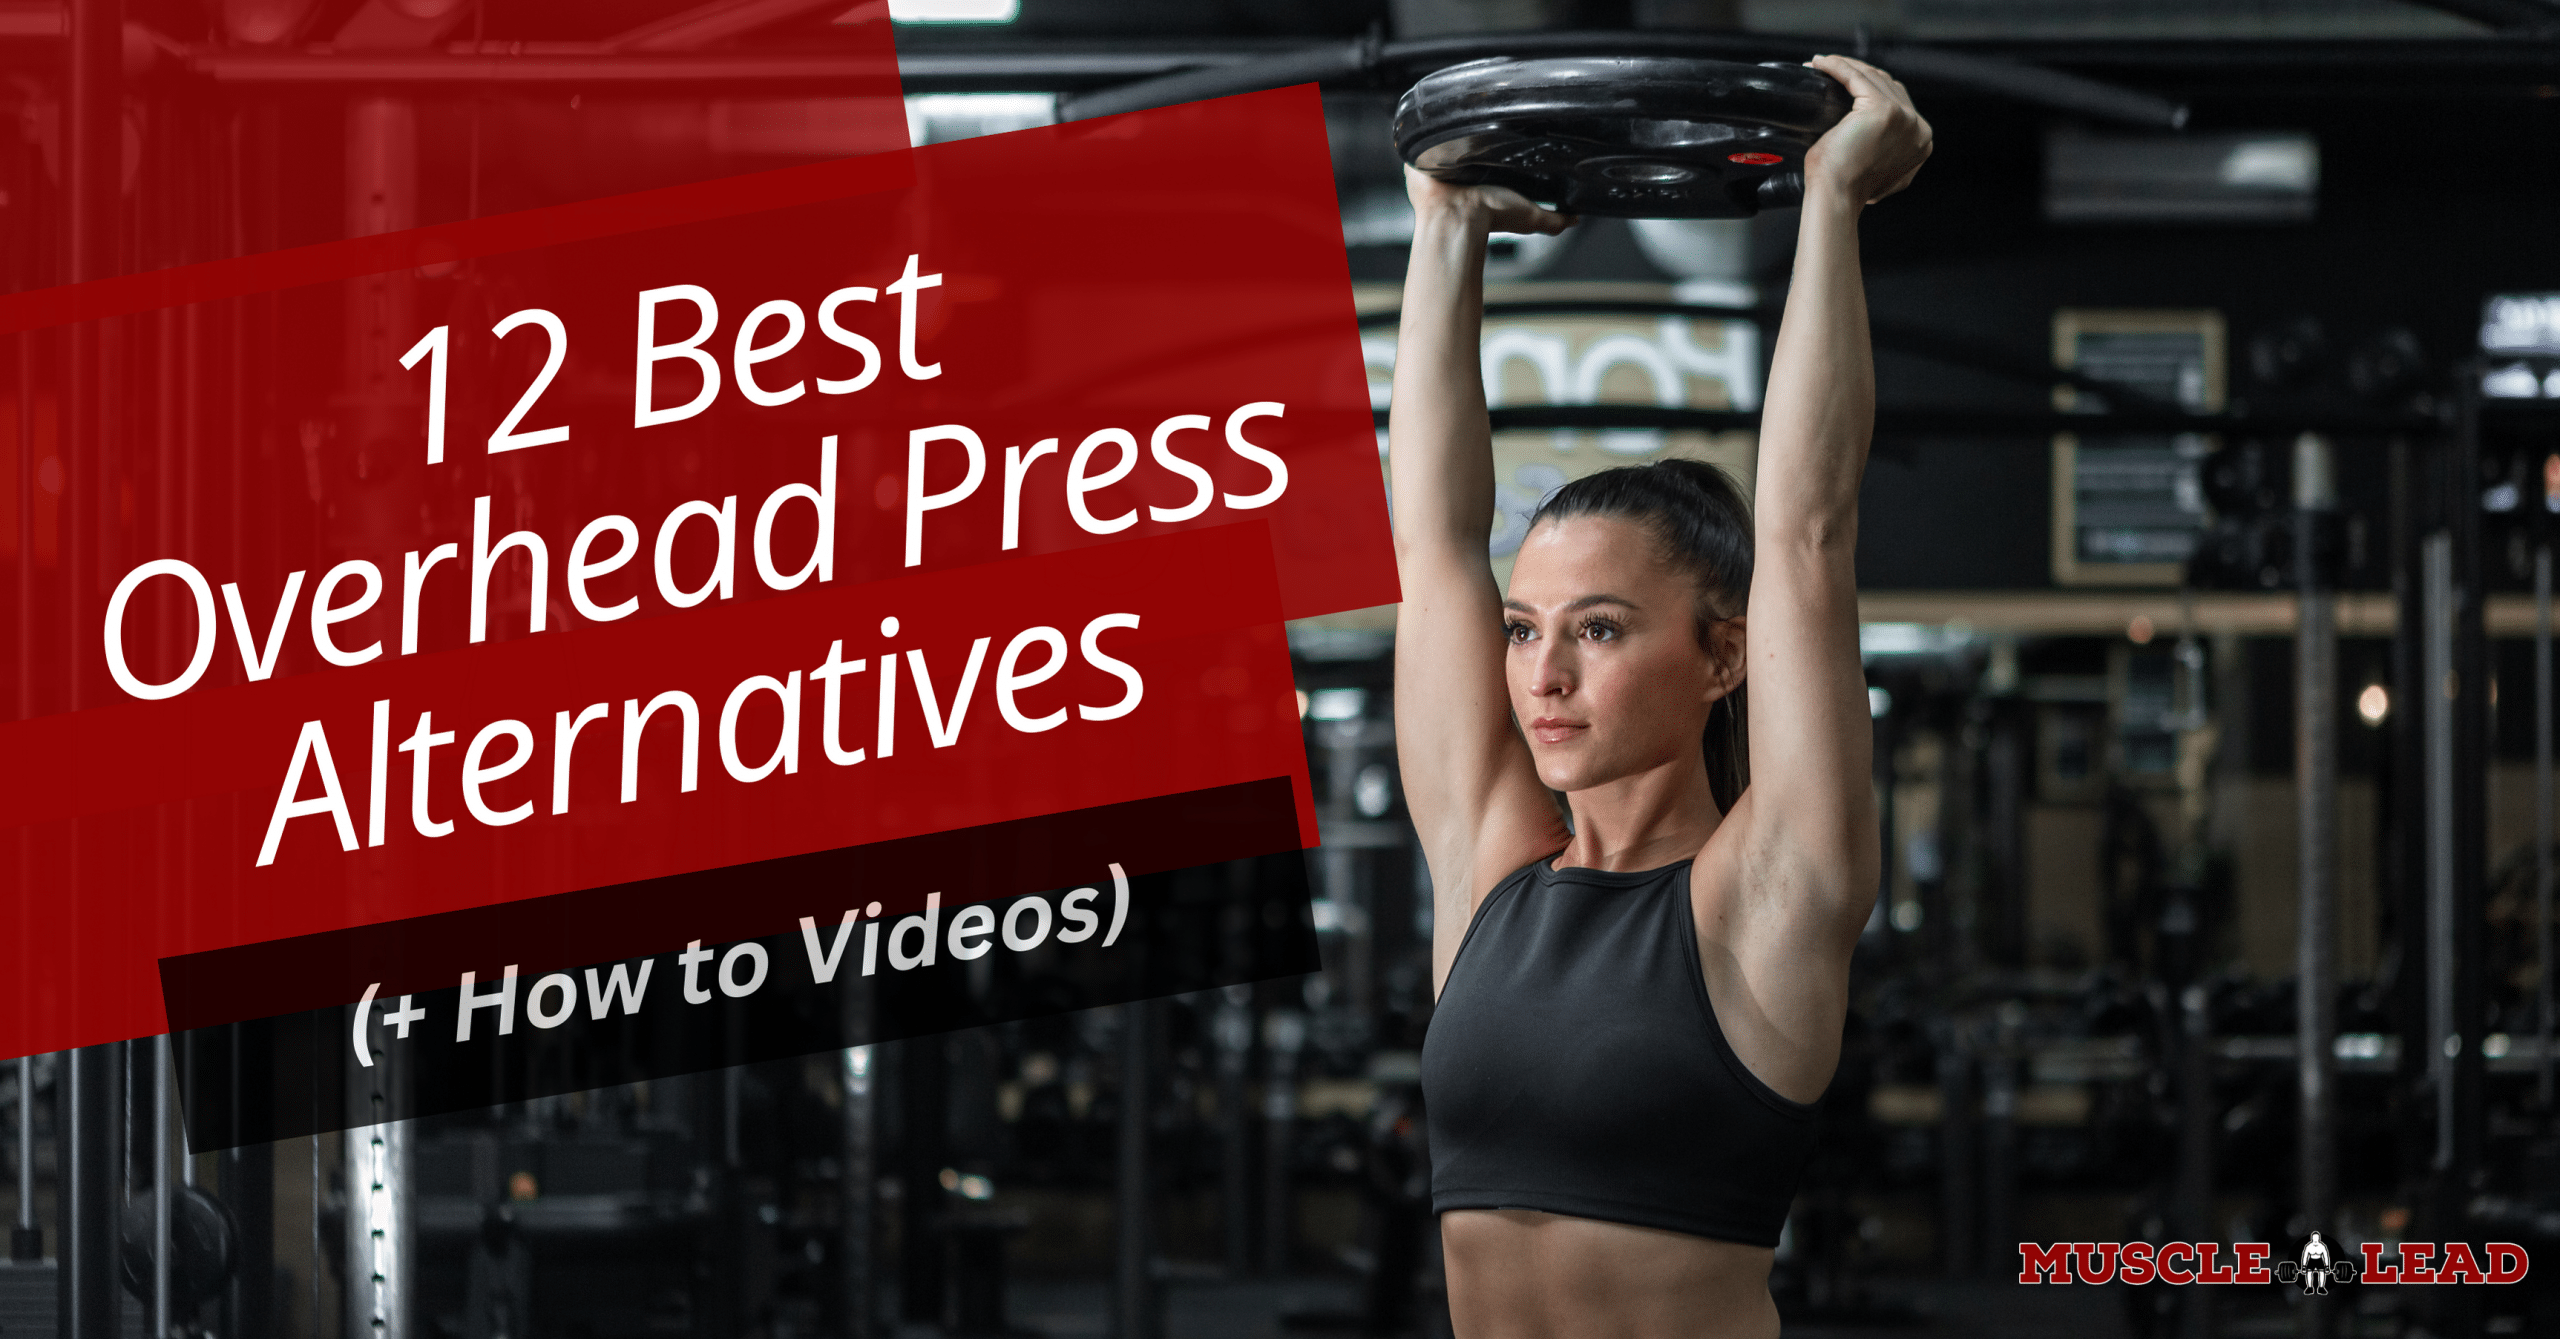 12 Best Overhead Press Alternatives (+ How to Videos)